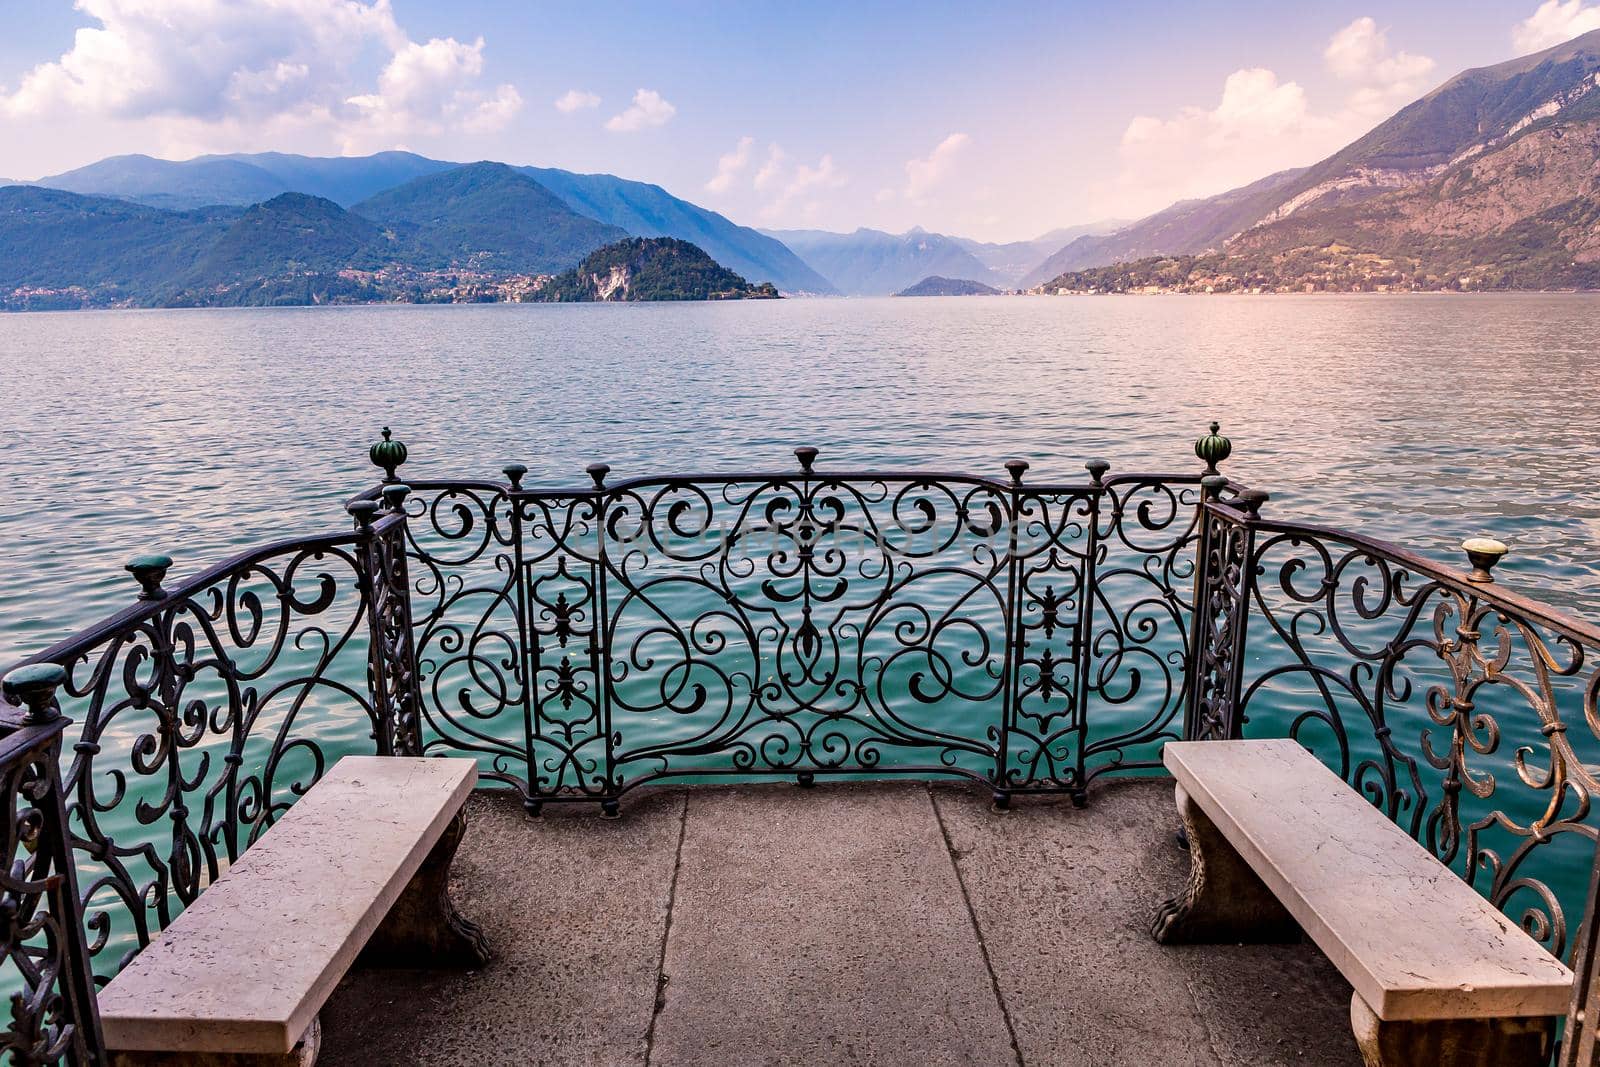 wiew of lake Como, near Bellagio, piedmonte, italy